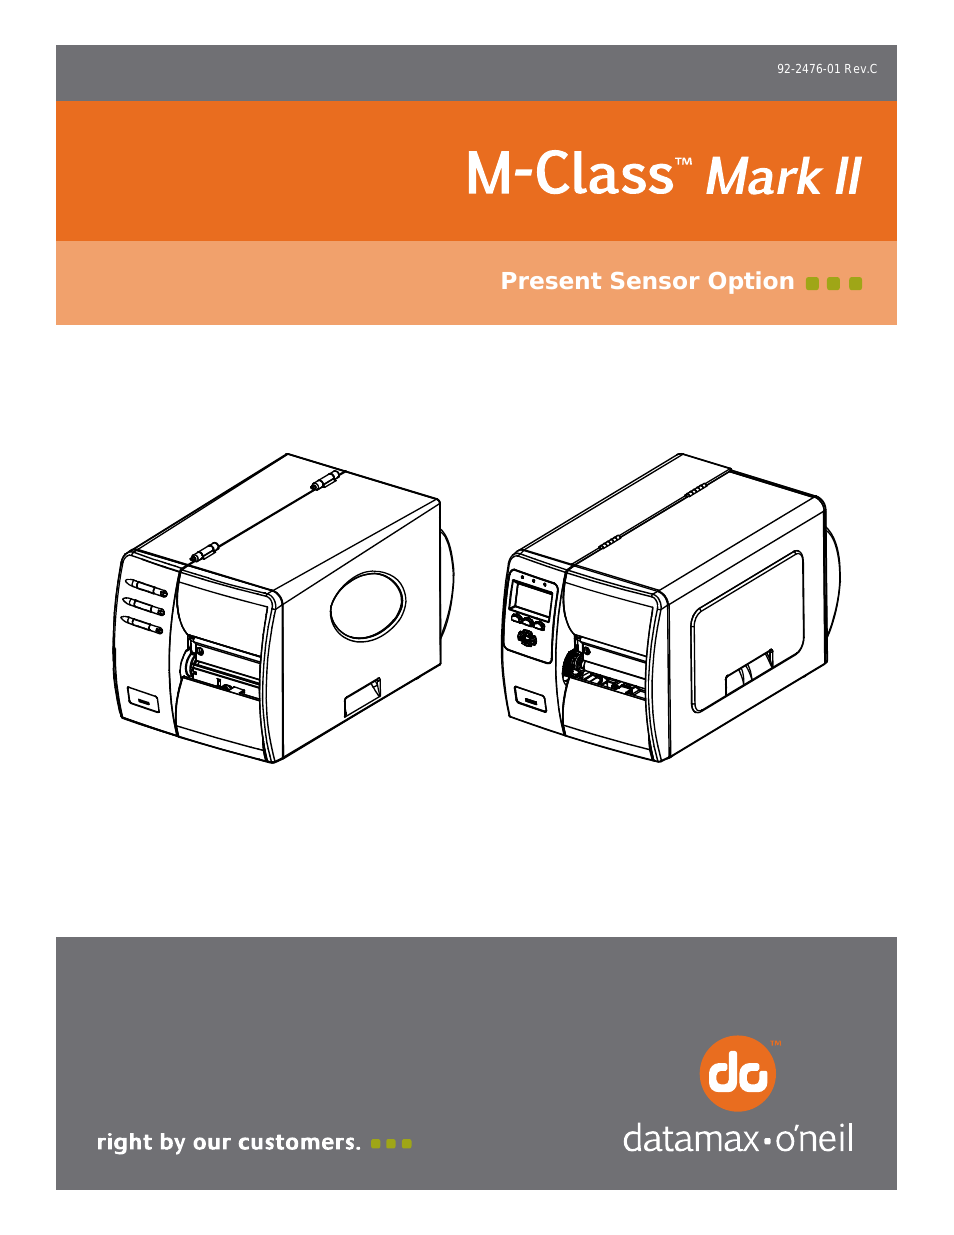 M-Class Mark II Present Sensor Option